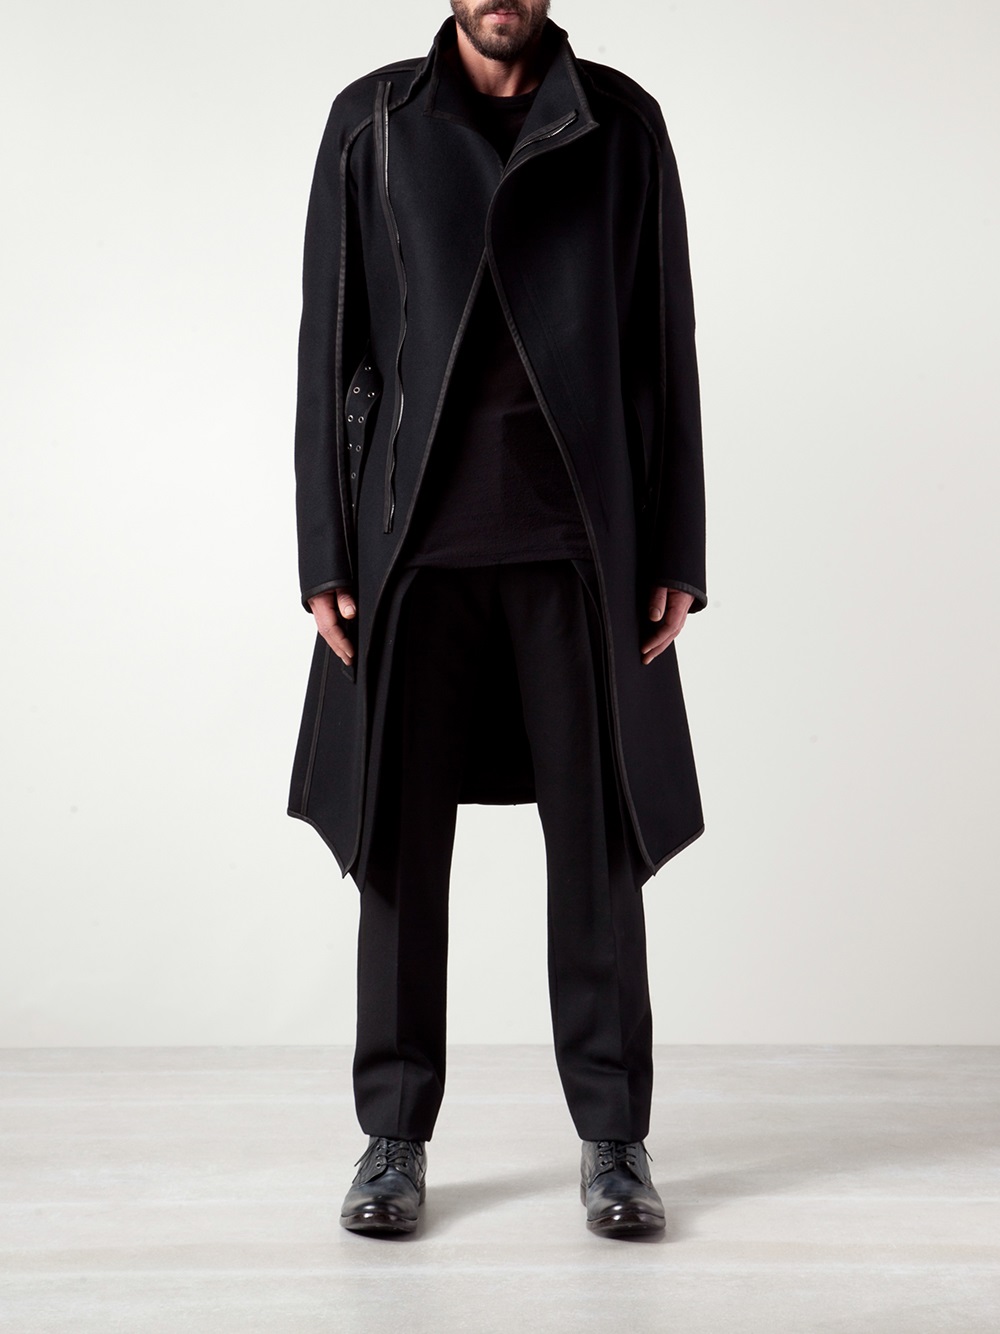 Gareth pugh High Collar Trench Coat in Black for Men | Lyst